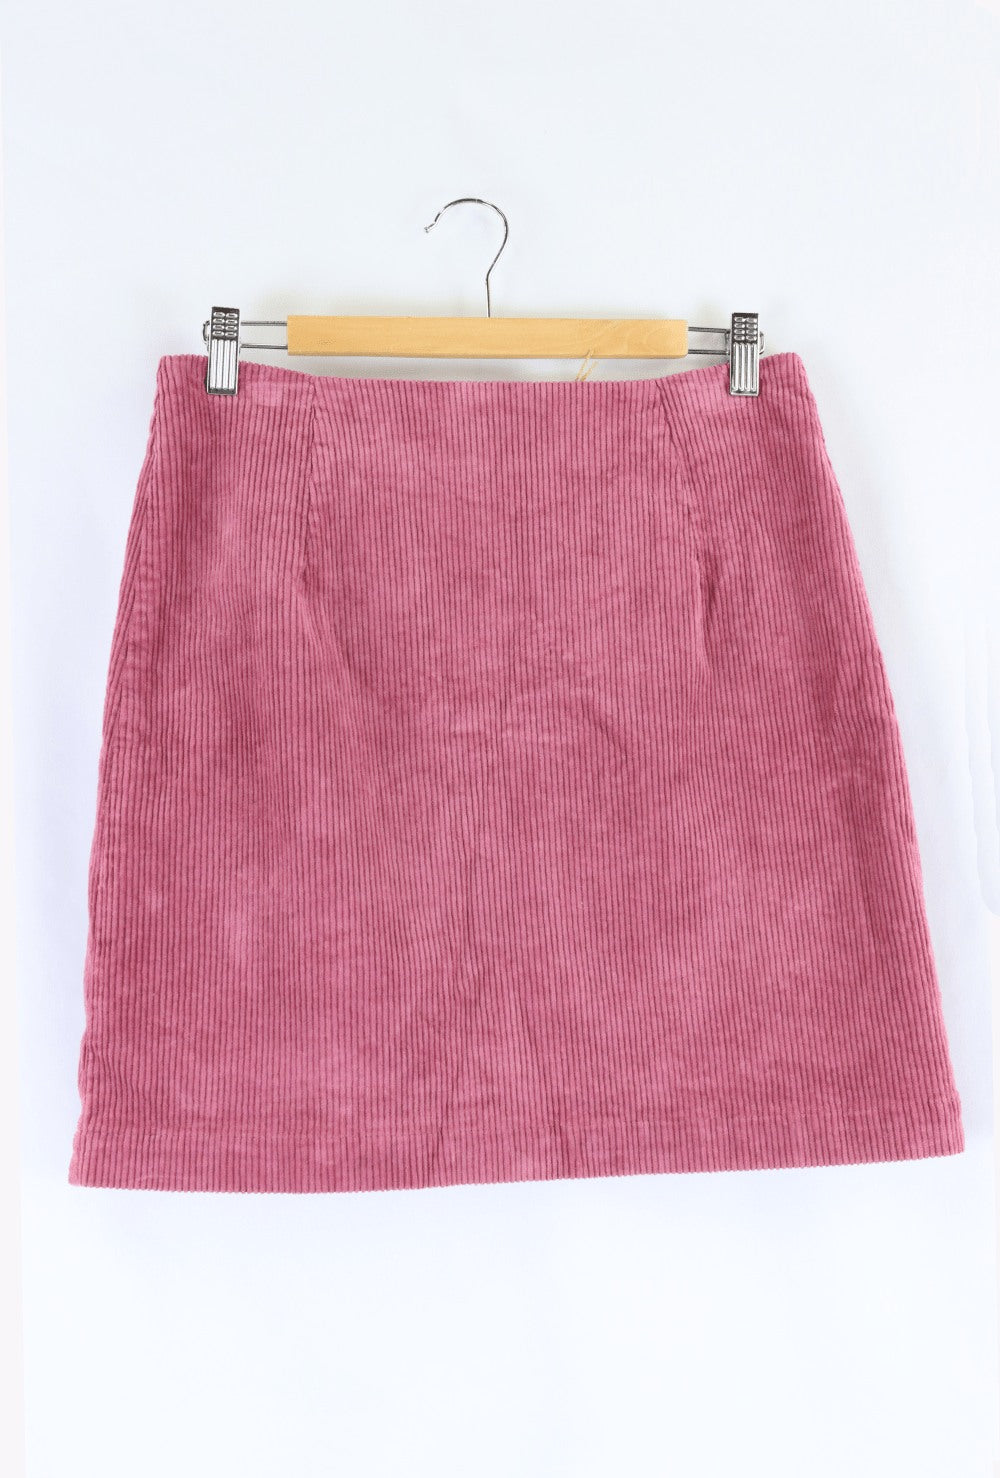 Gorman Pink Corduroy Skirt 10